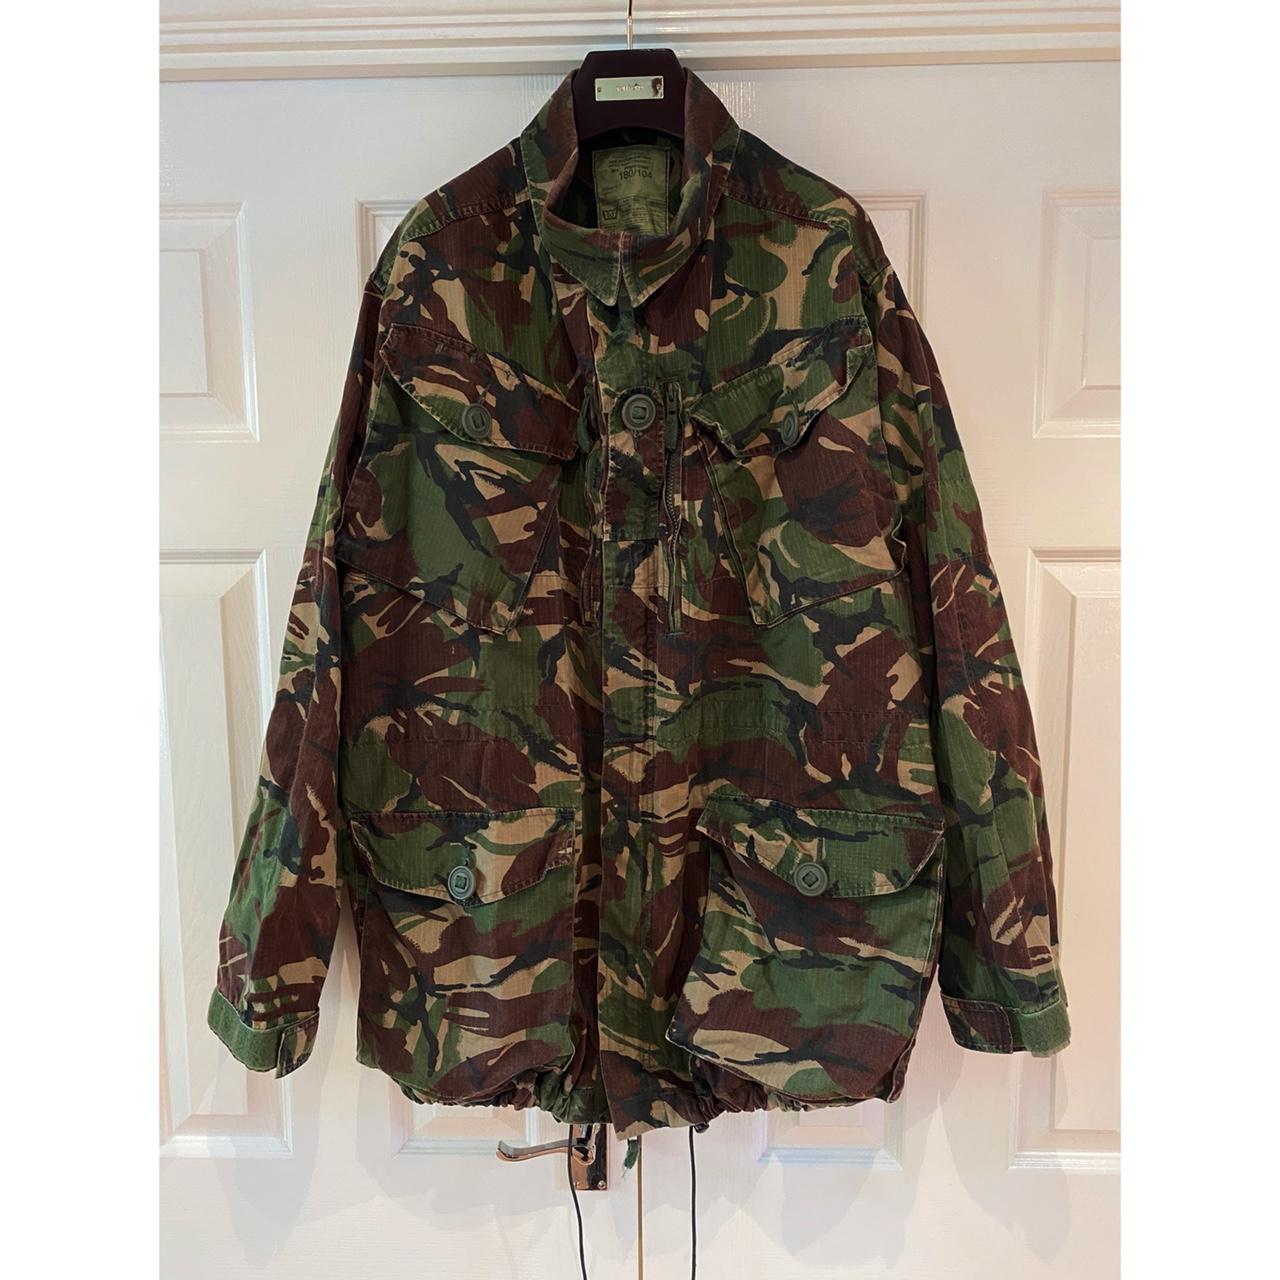 Authentic British military camo coat, fits oversized... - Depop